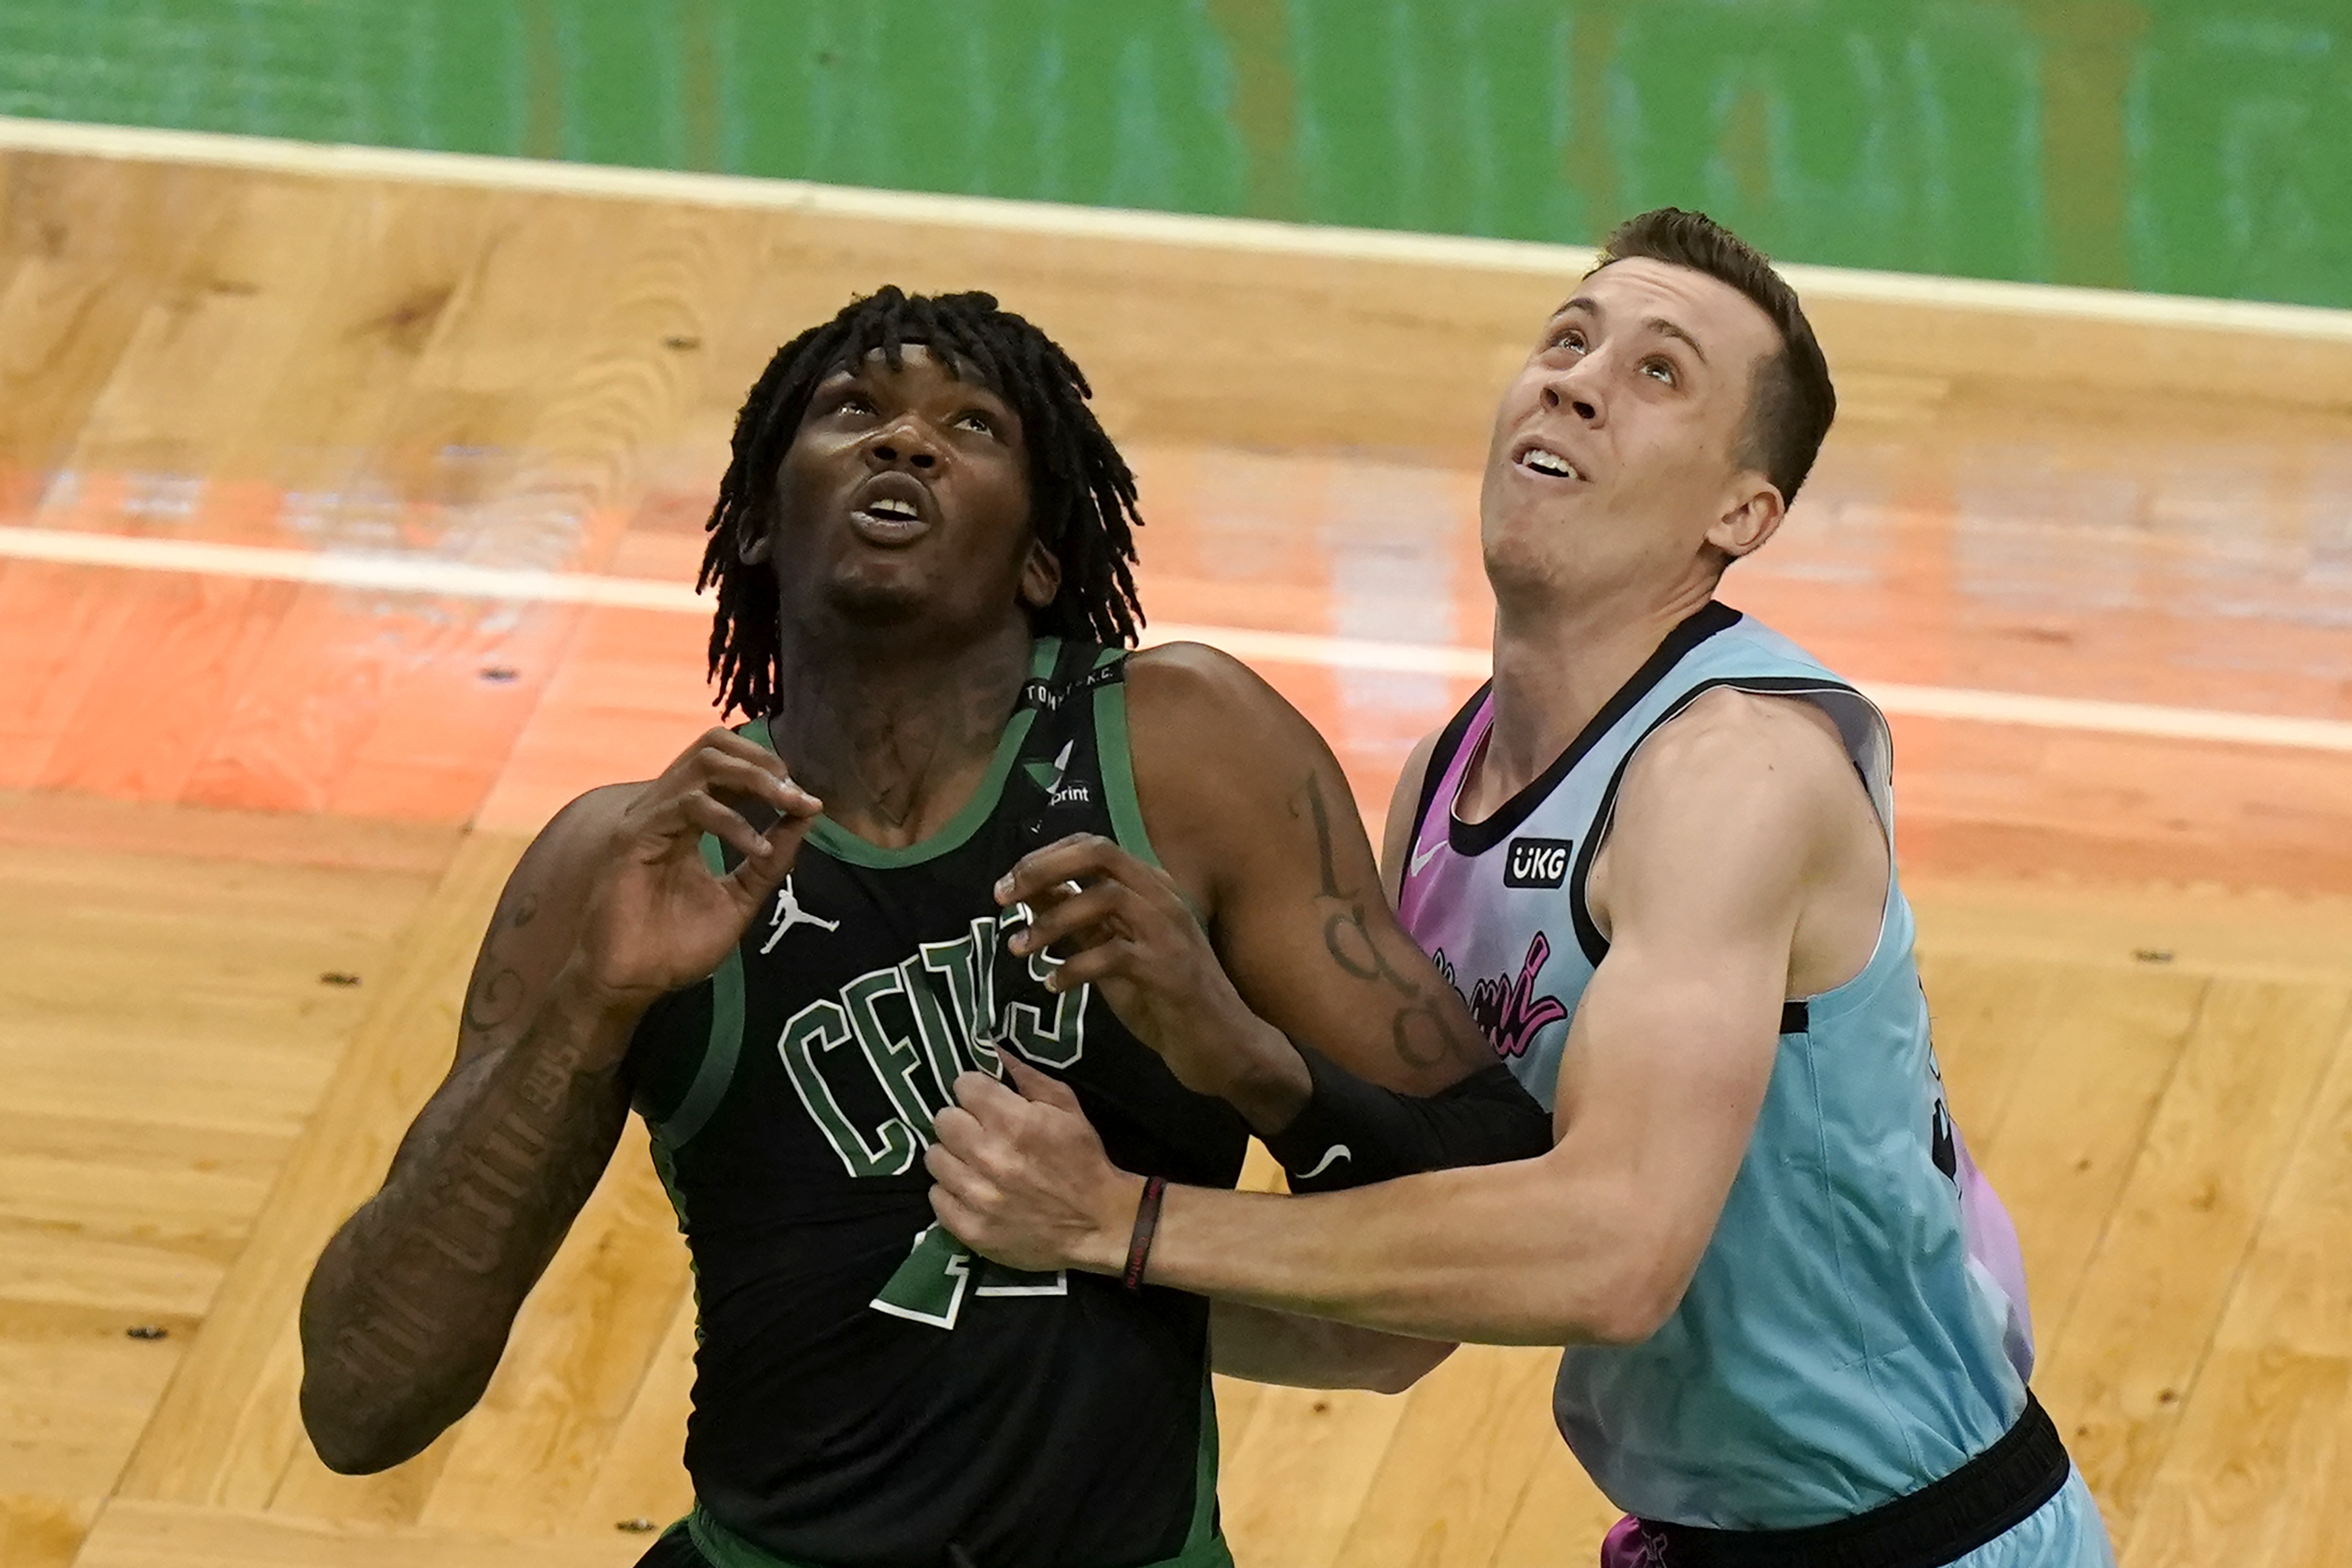 Robert Williams - Boston Celtics - 2018 NBA Draft - Autographed Jersey